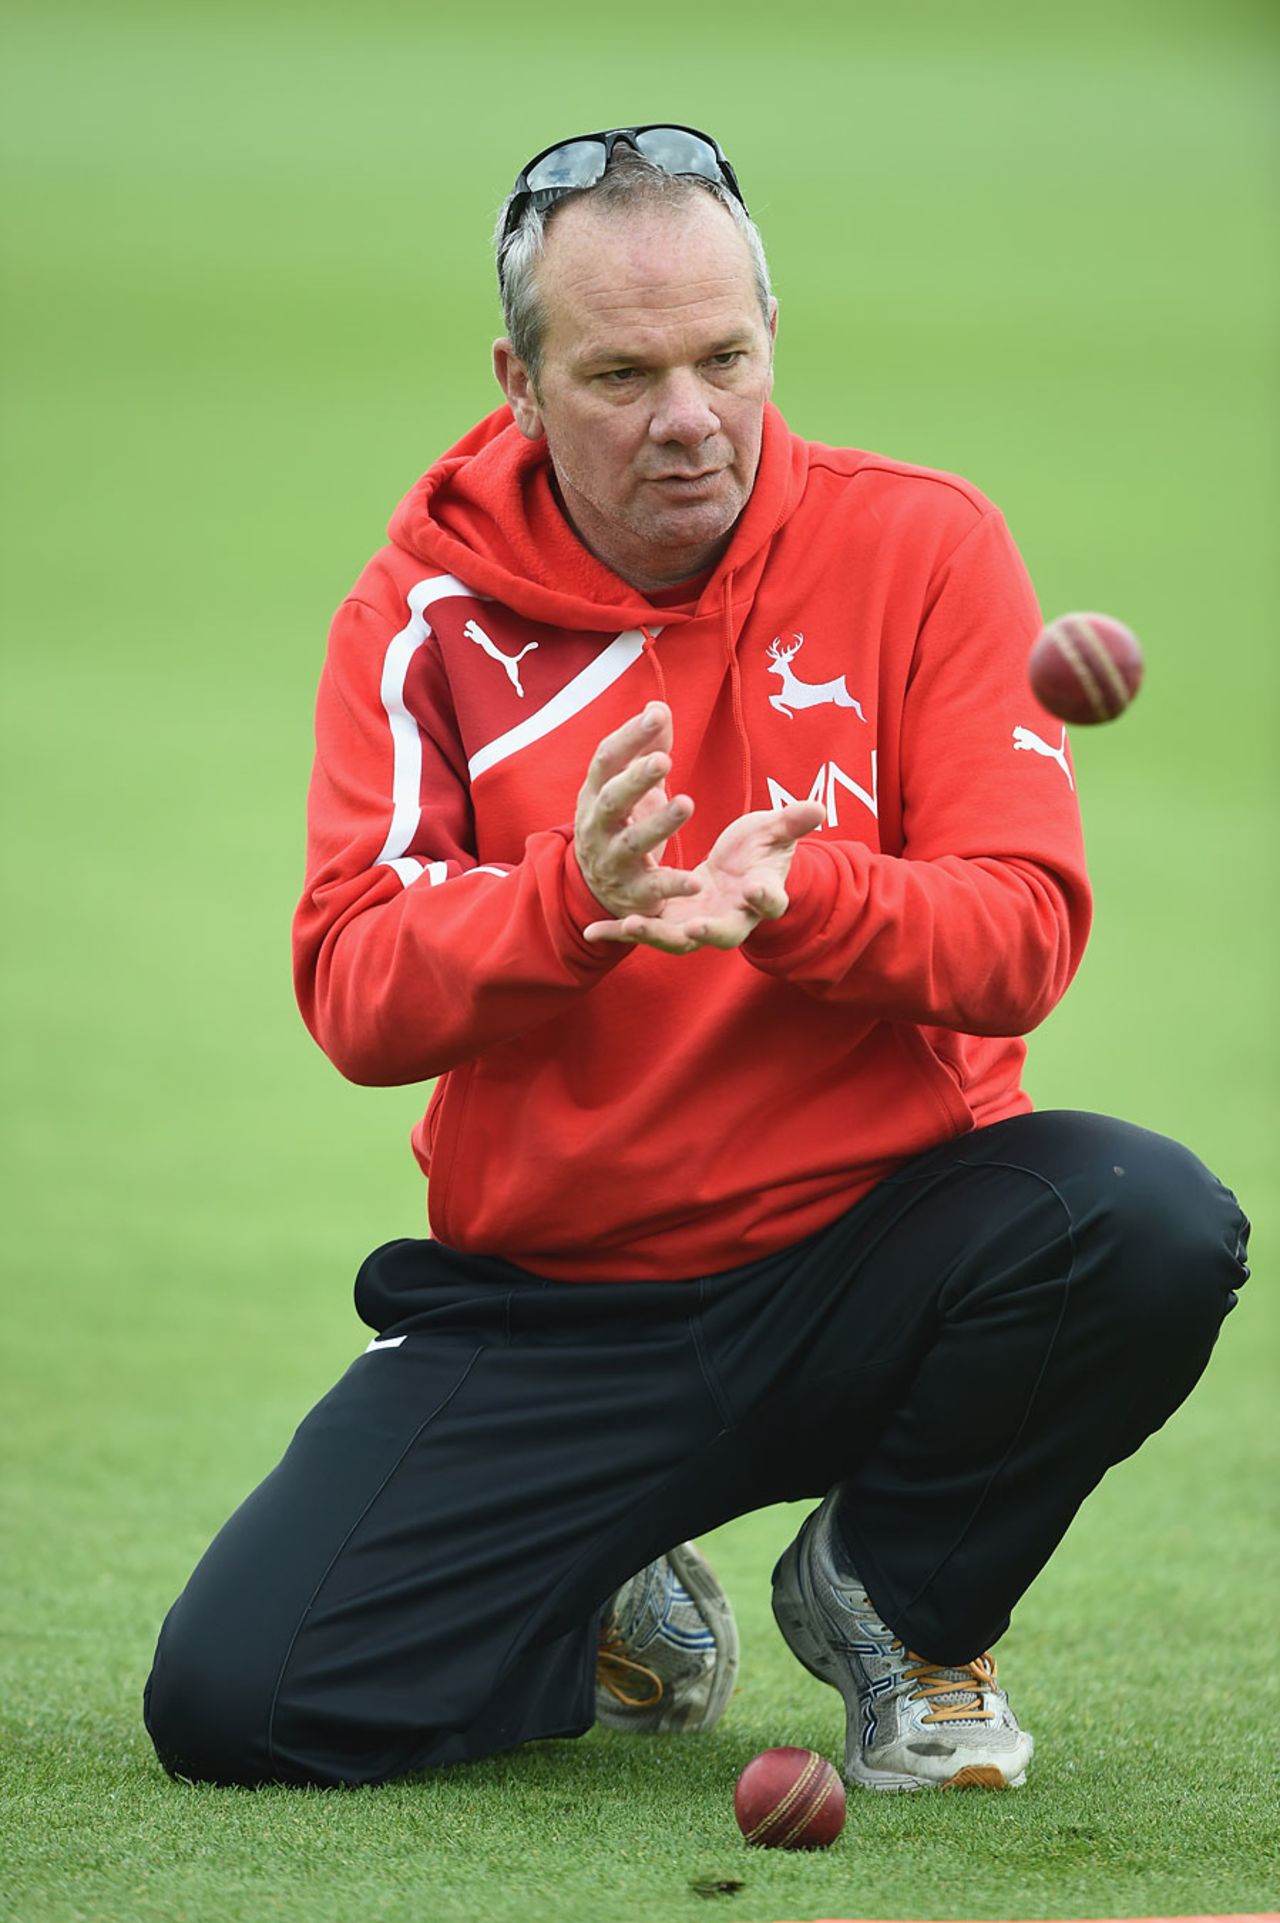 Mick Newell takes fielding drills, Nottinghamshire v Warwickshire, County Championship, Division One, Trent Bridge, April 27, 2014